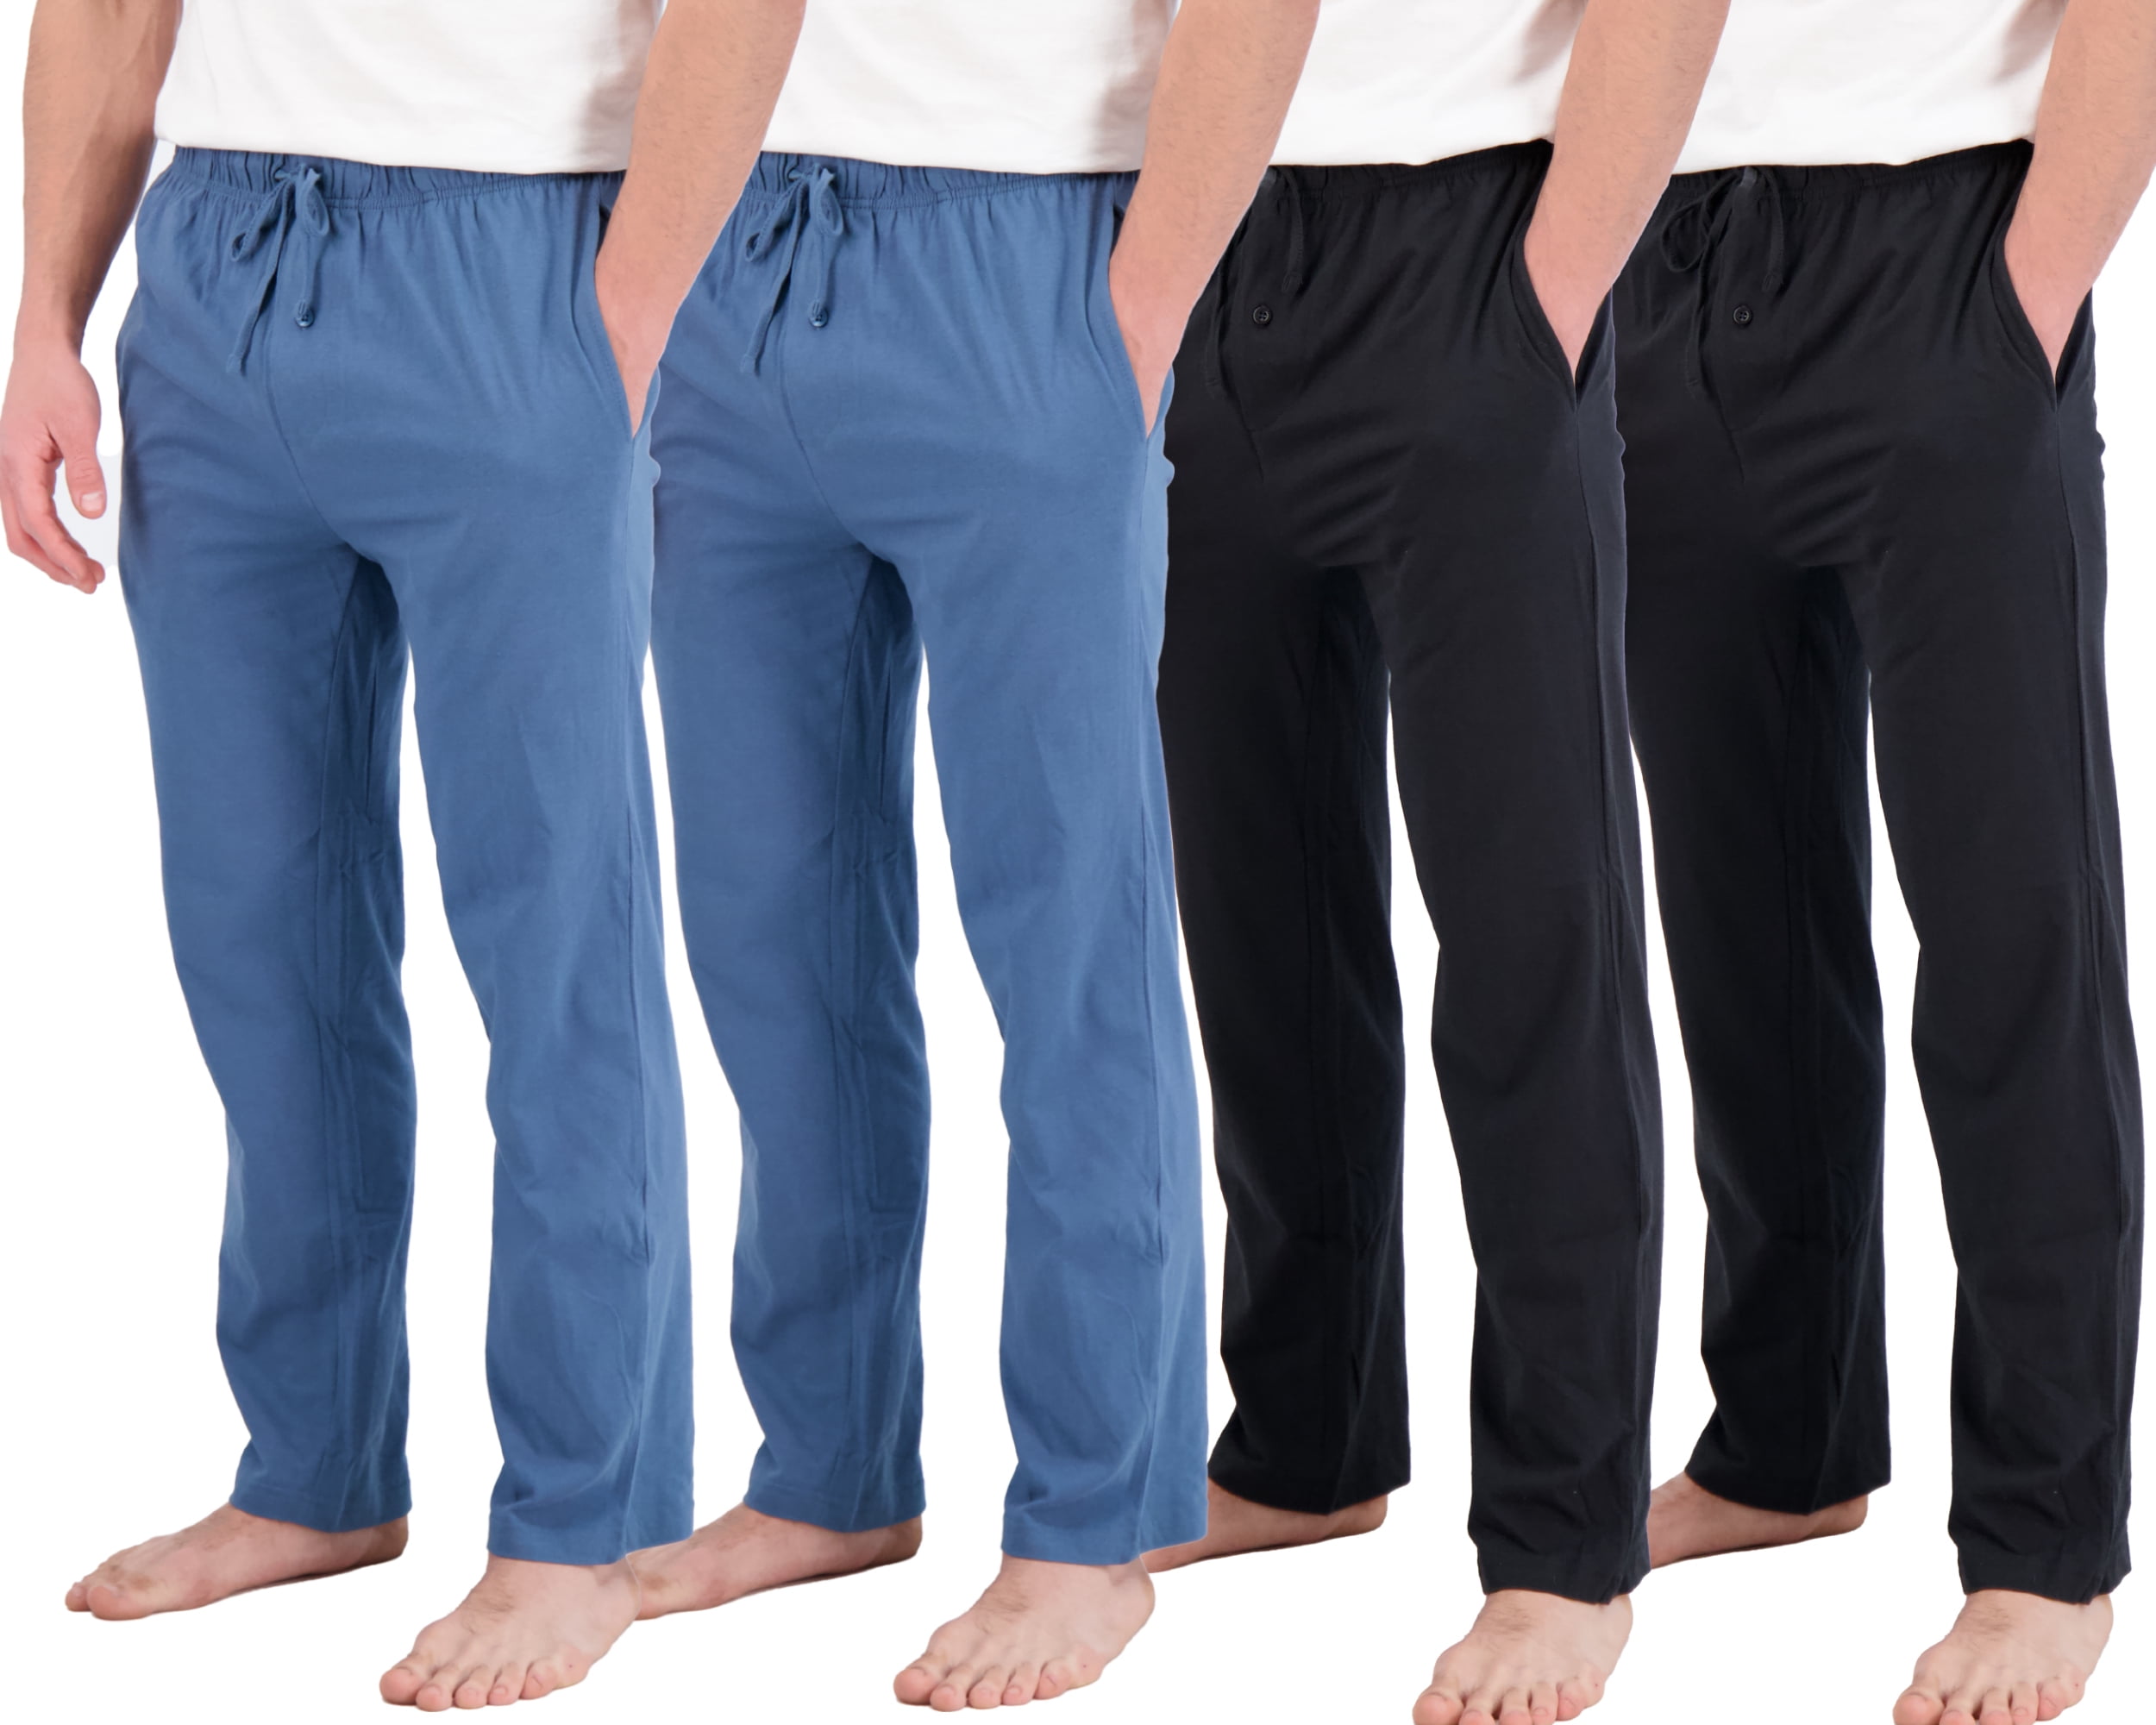 Men's Bean's Cotton Knit Pajamas, Sleep Pants | Pajamas at L.L.Bean